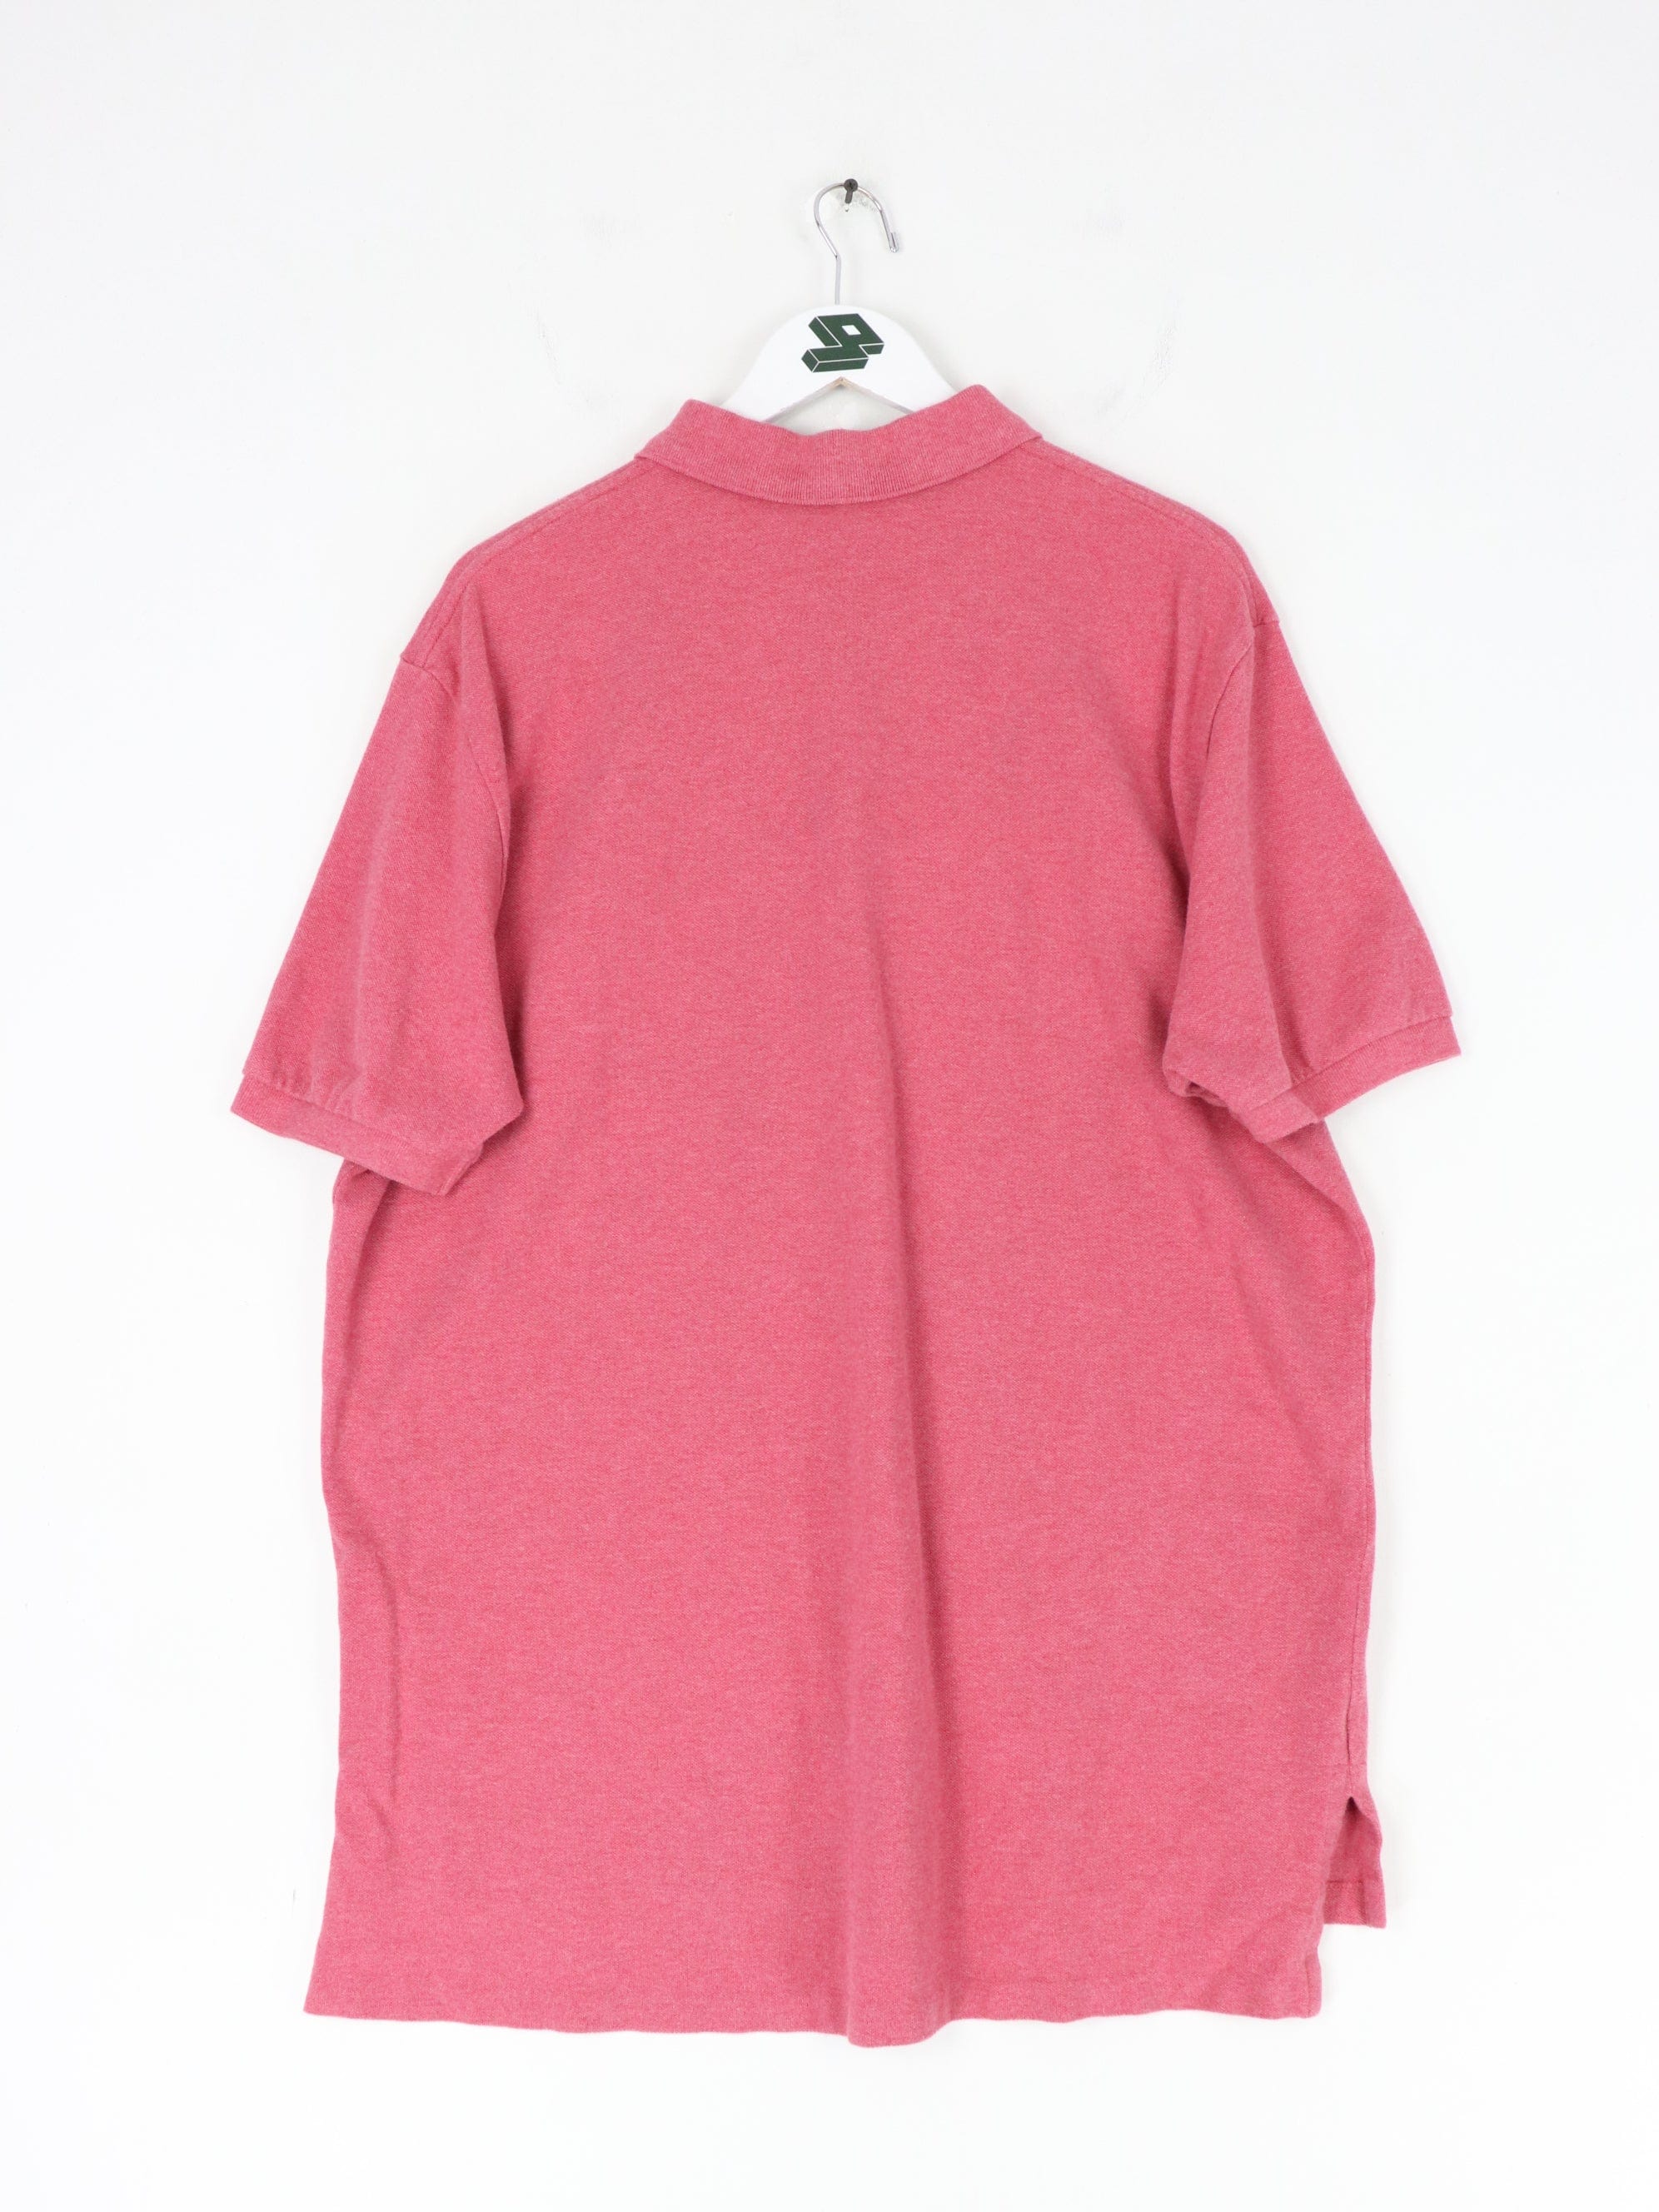 Polo Ralph Lauren Polo Shirt Mens XL Pink Pony Collared Casual | eBay